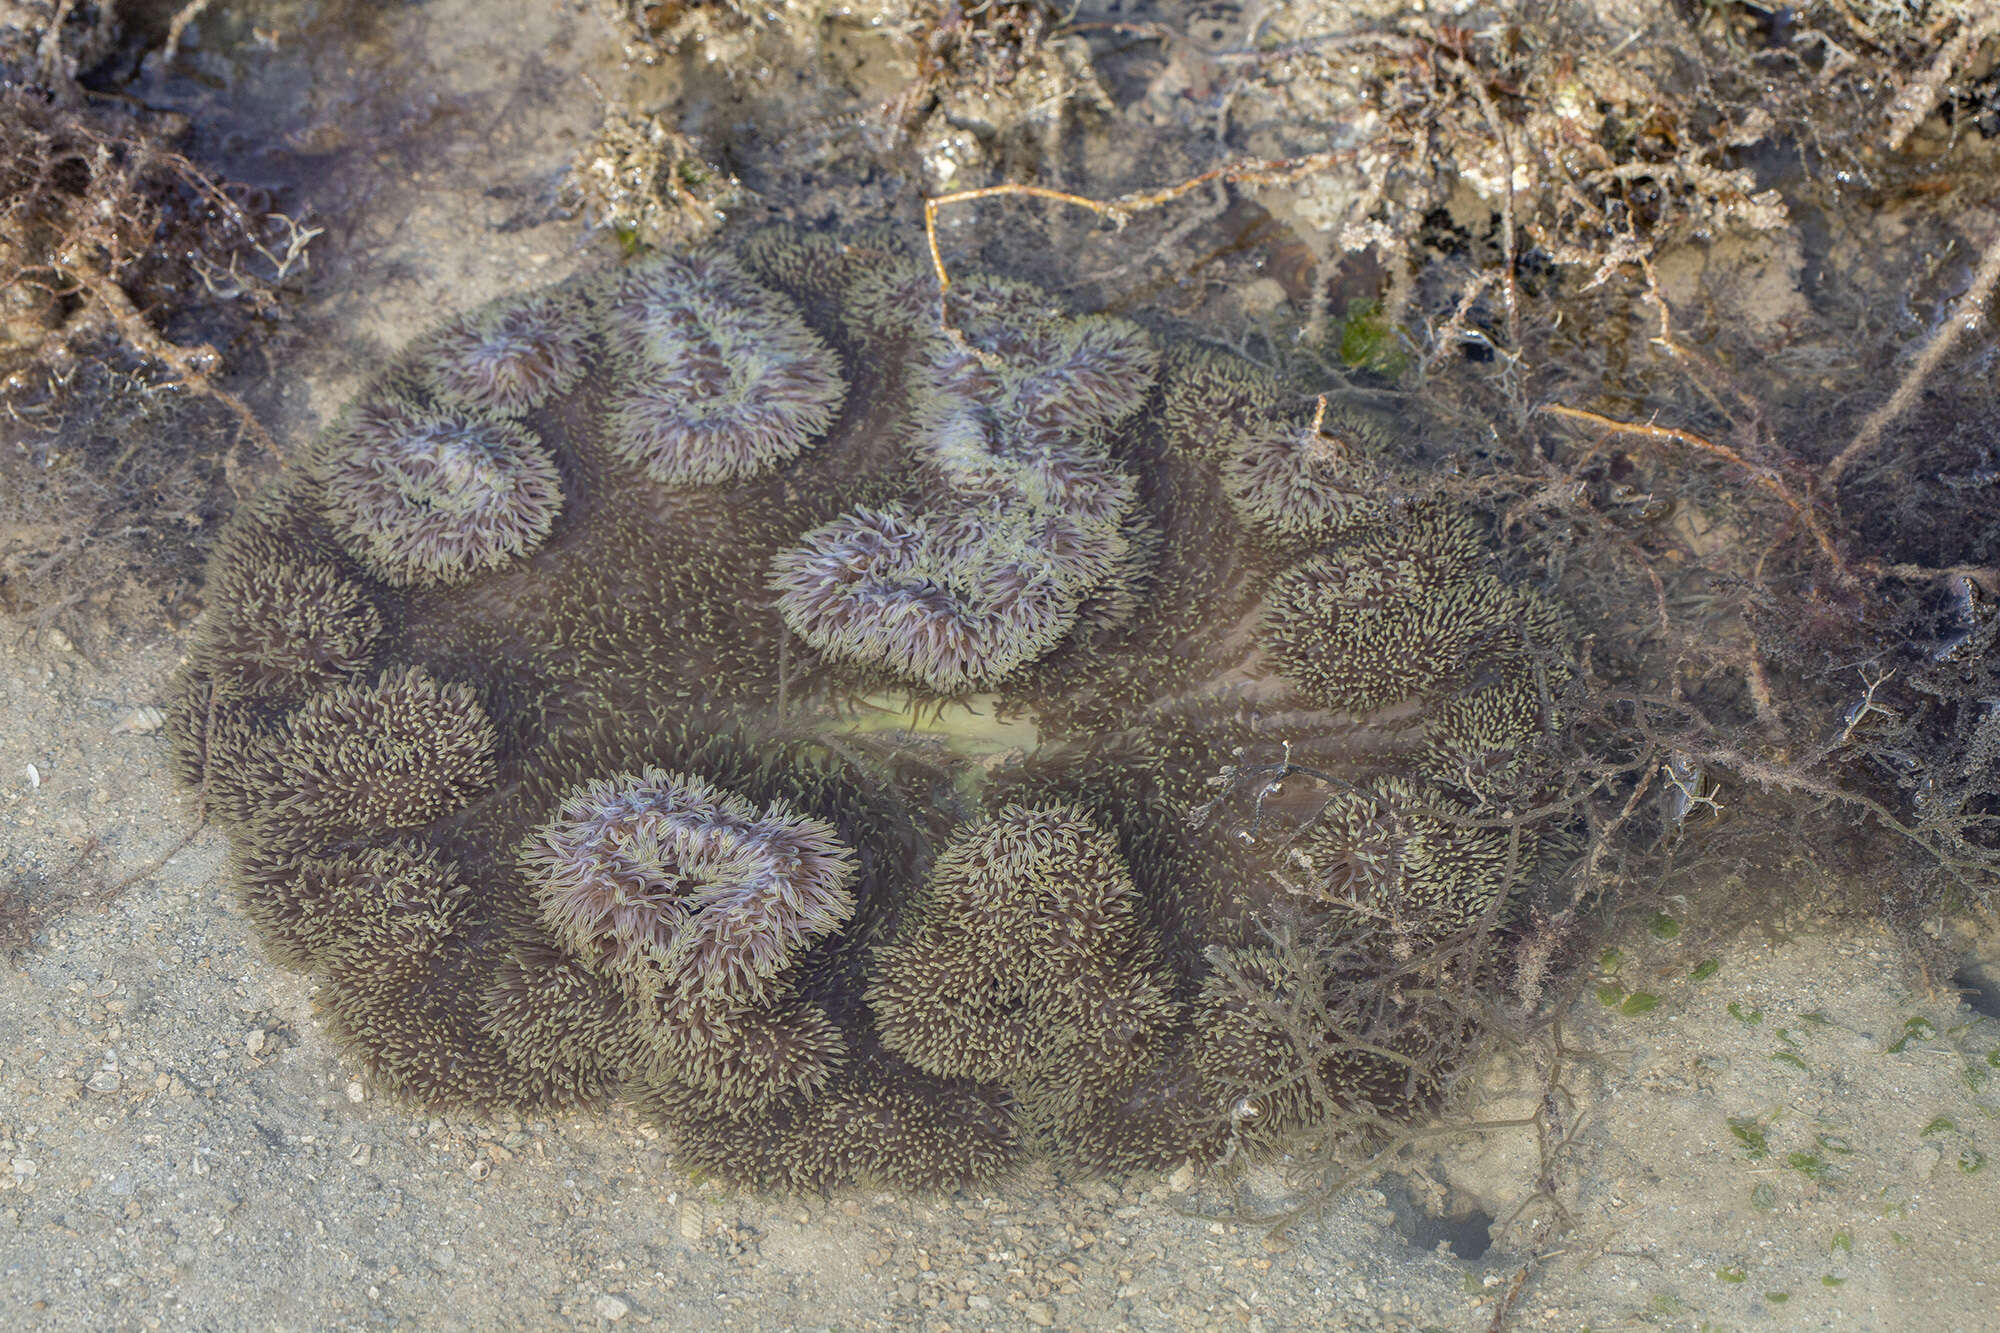 Image of Gigantic sea anemone